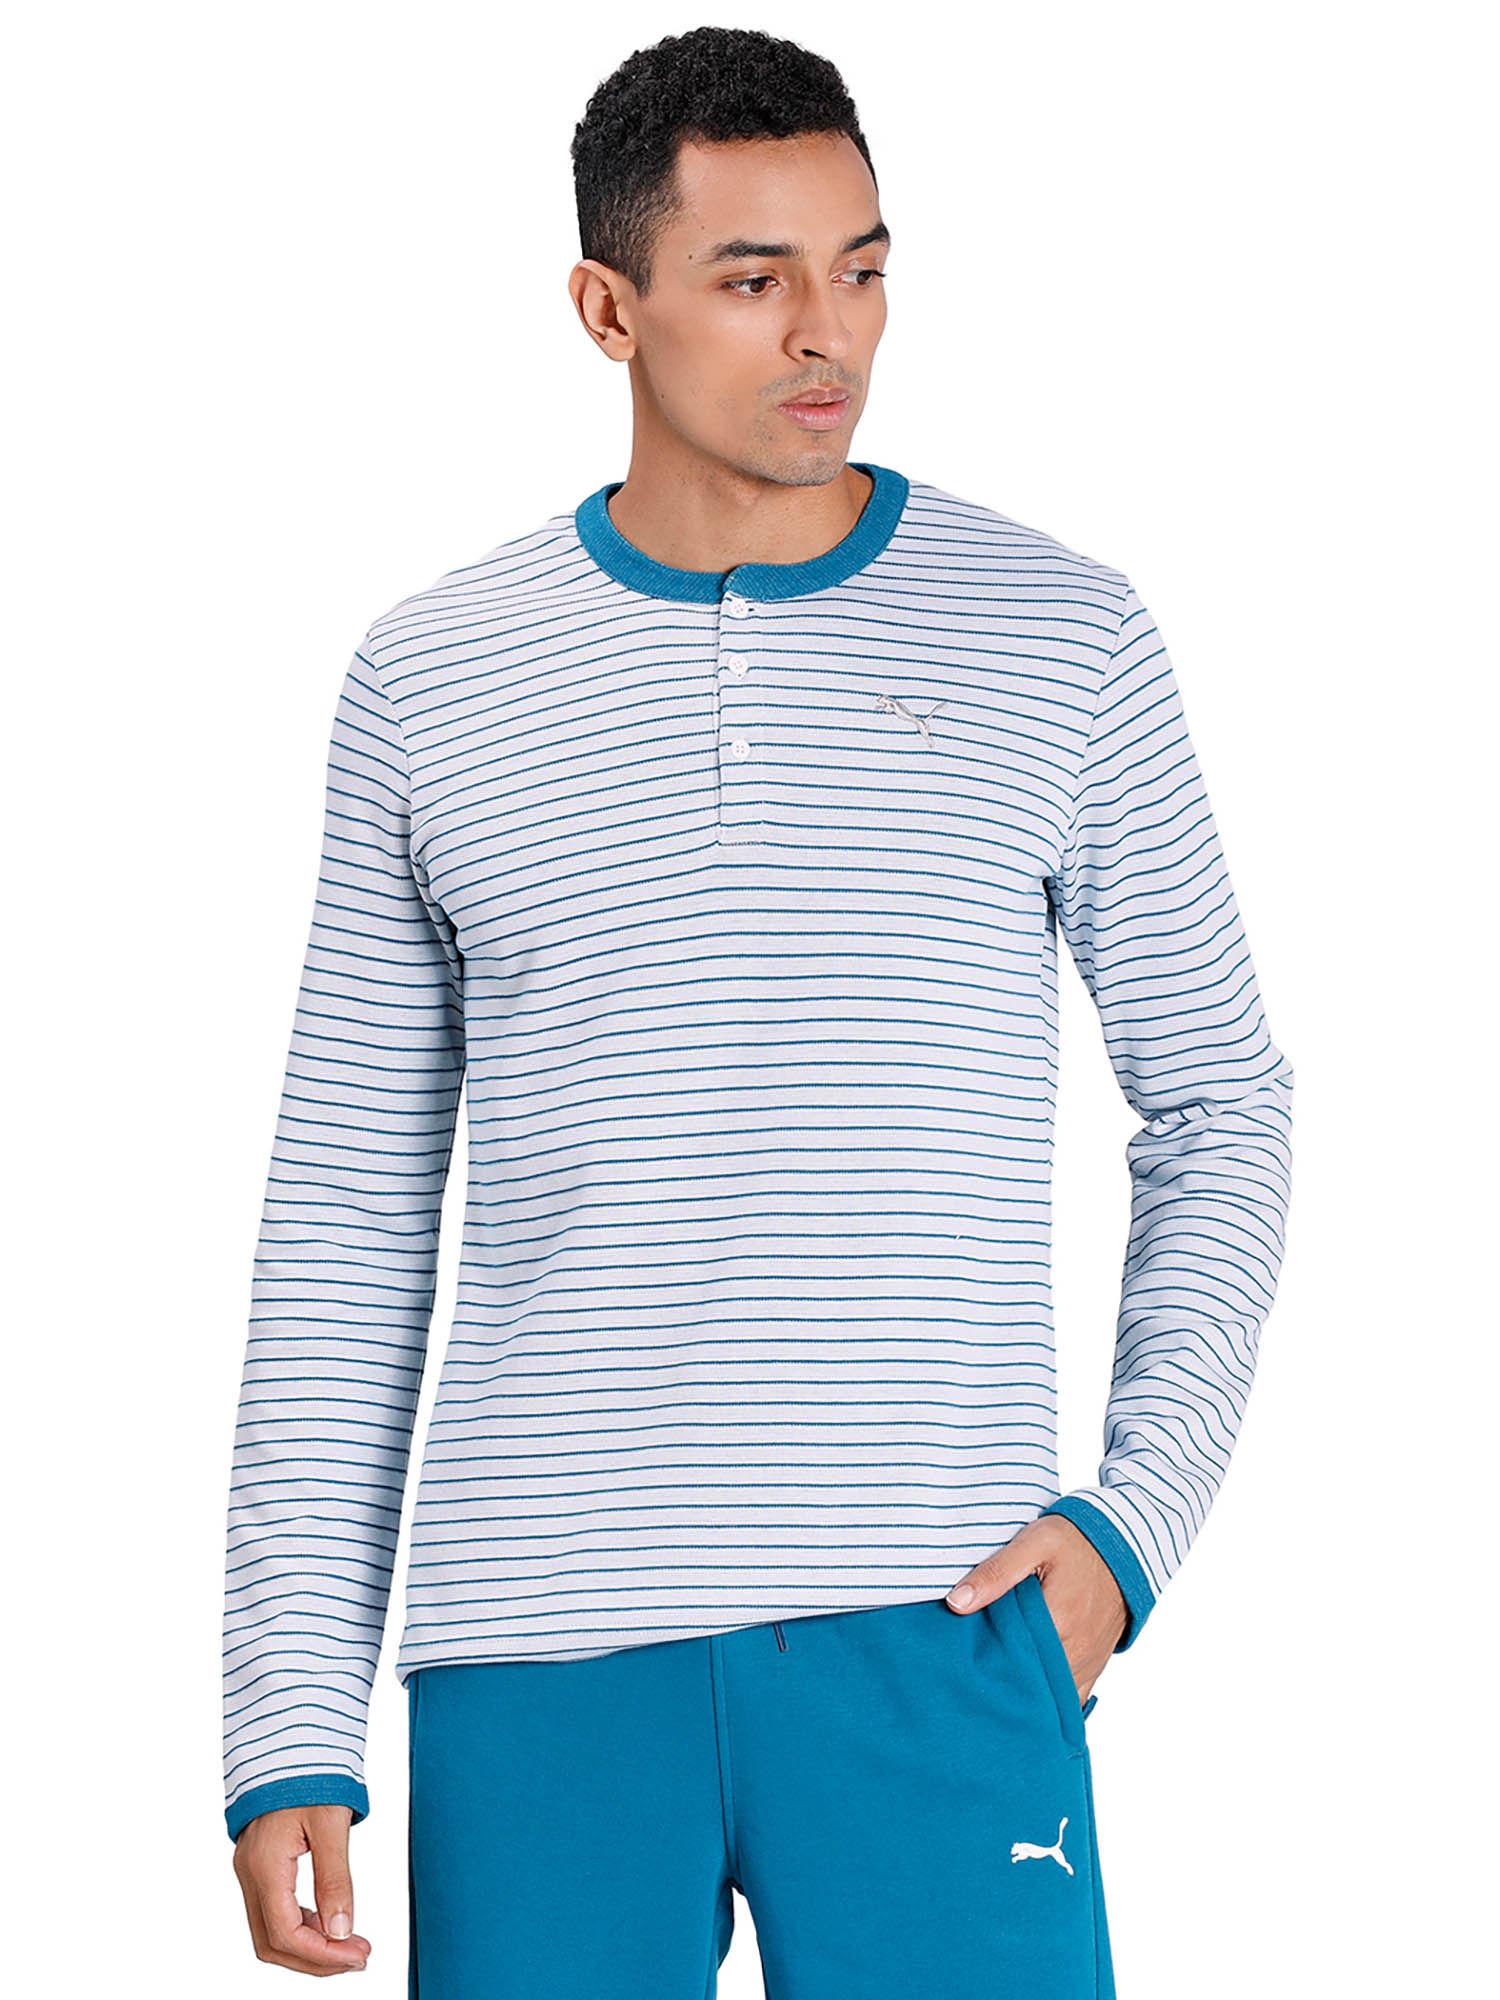 blue-stripes-sweater